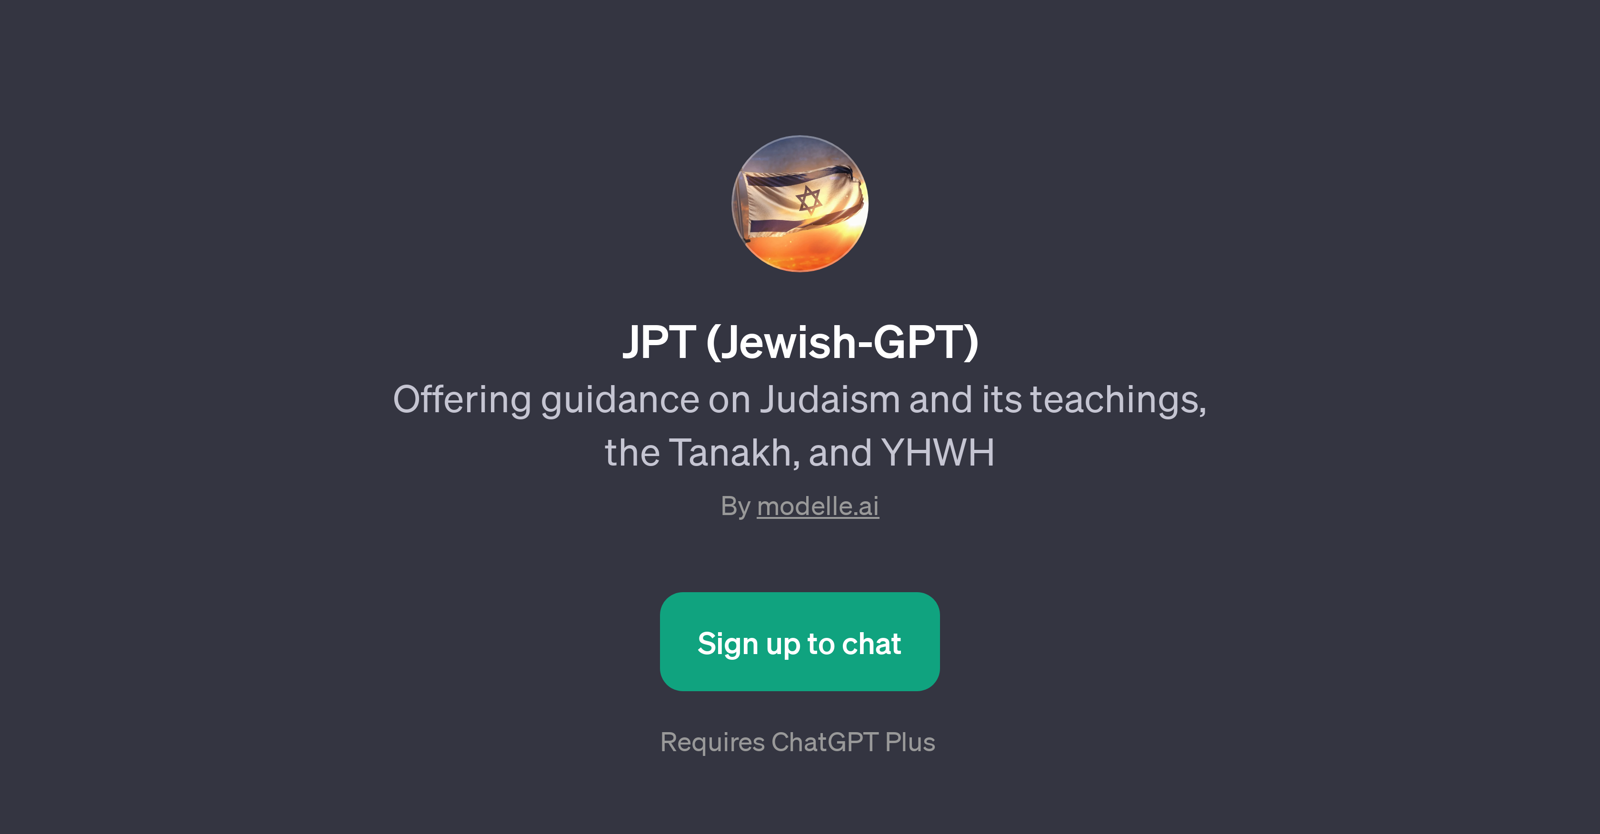 JPT (Jewish-GPT) website